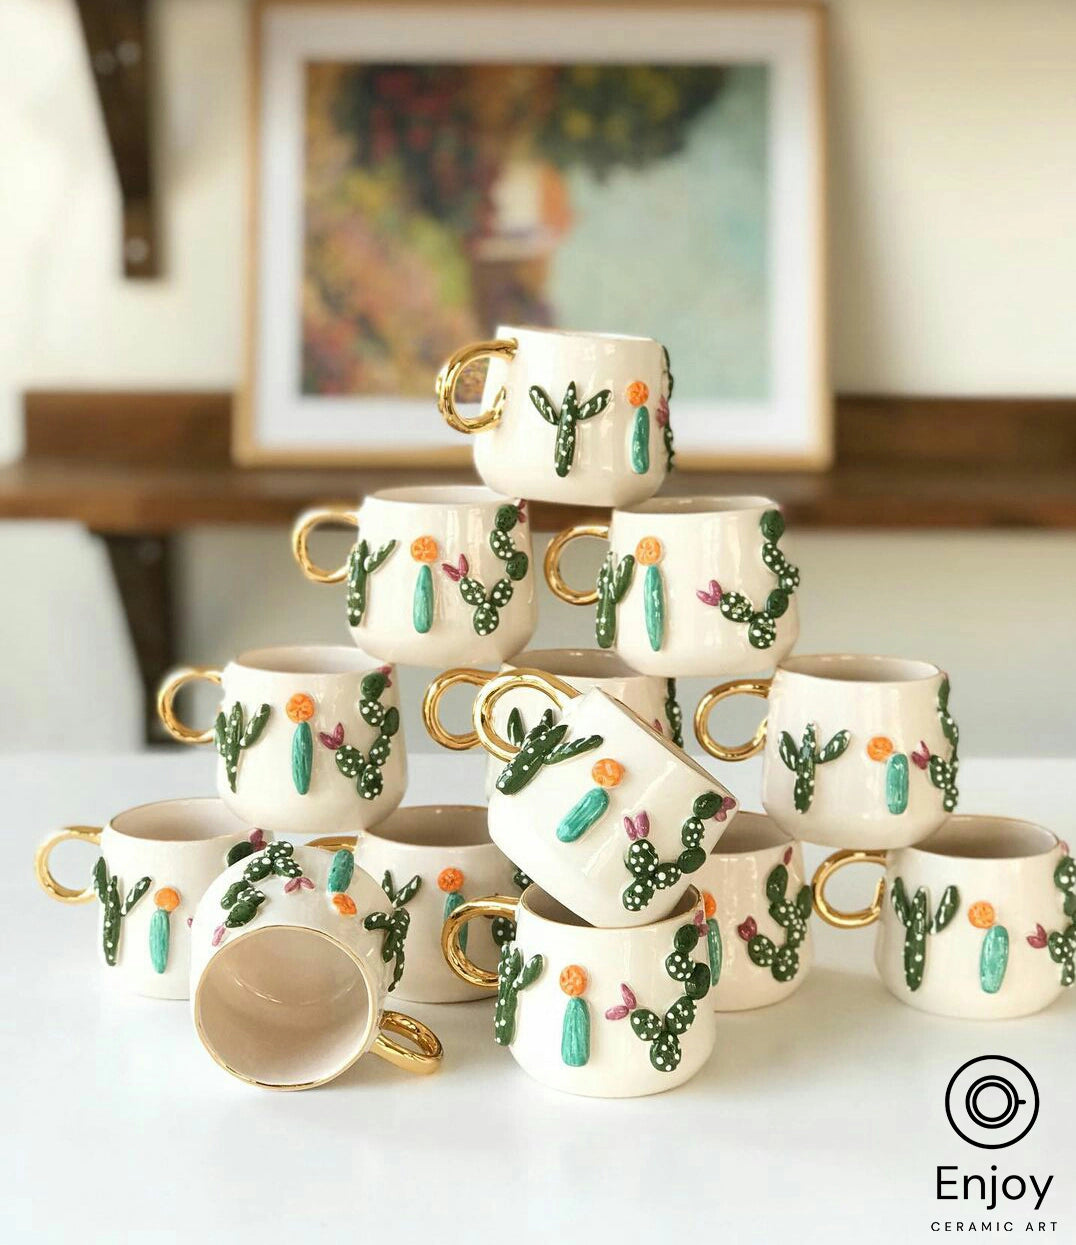 Modern, Handmade Coffee Mugs to Help You Enjoy Your Favorite Hot